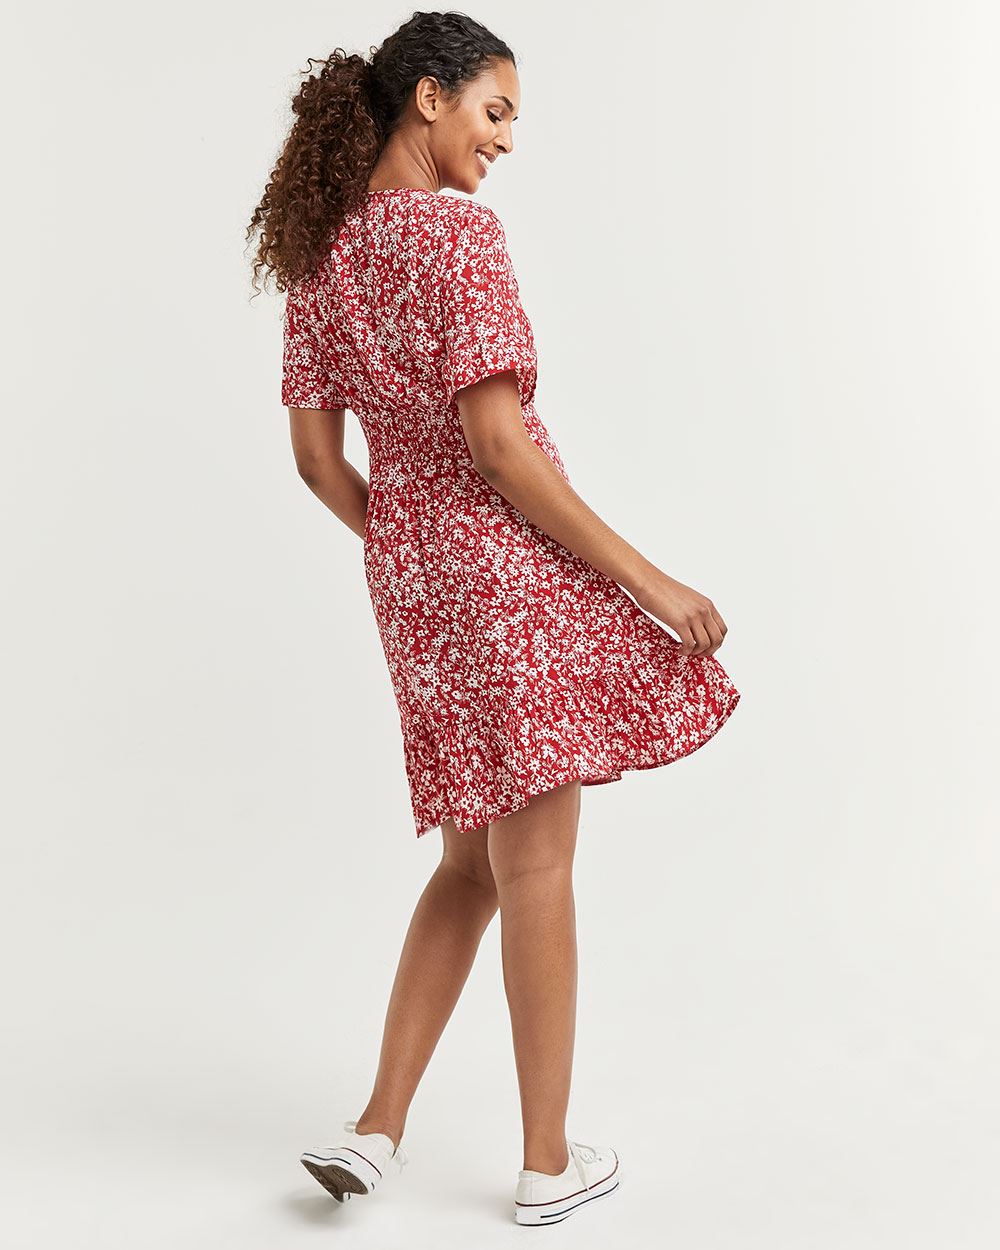 Reitmans Summer Dresses Top Sellers, UP ...